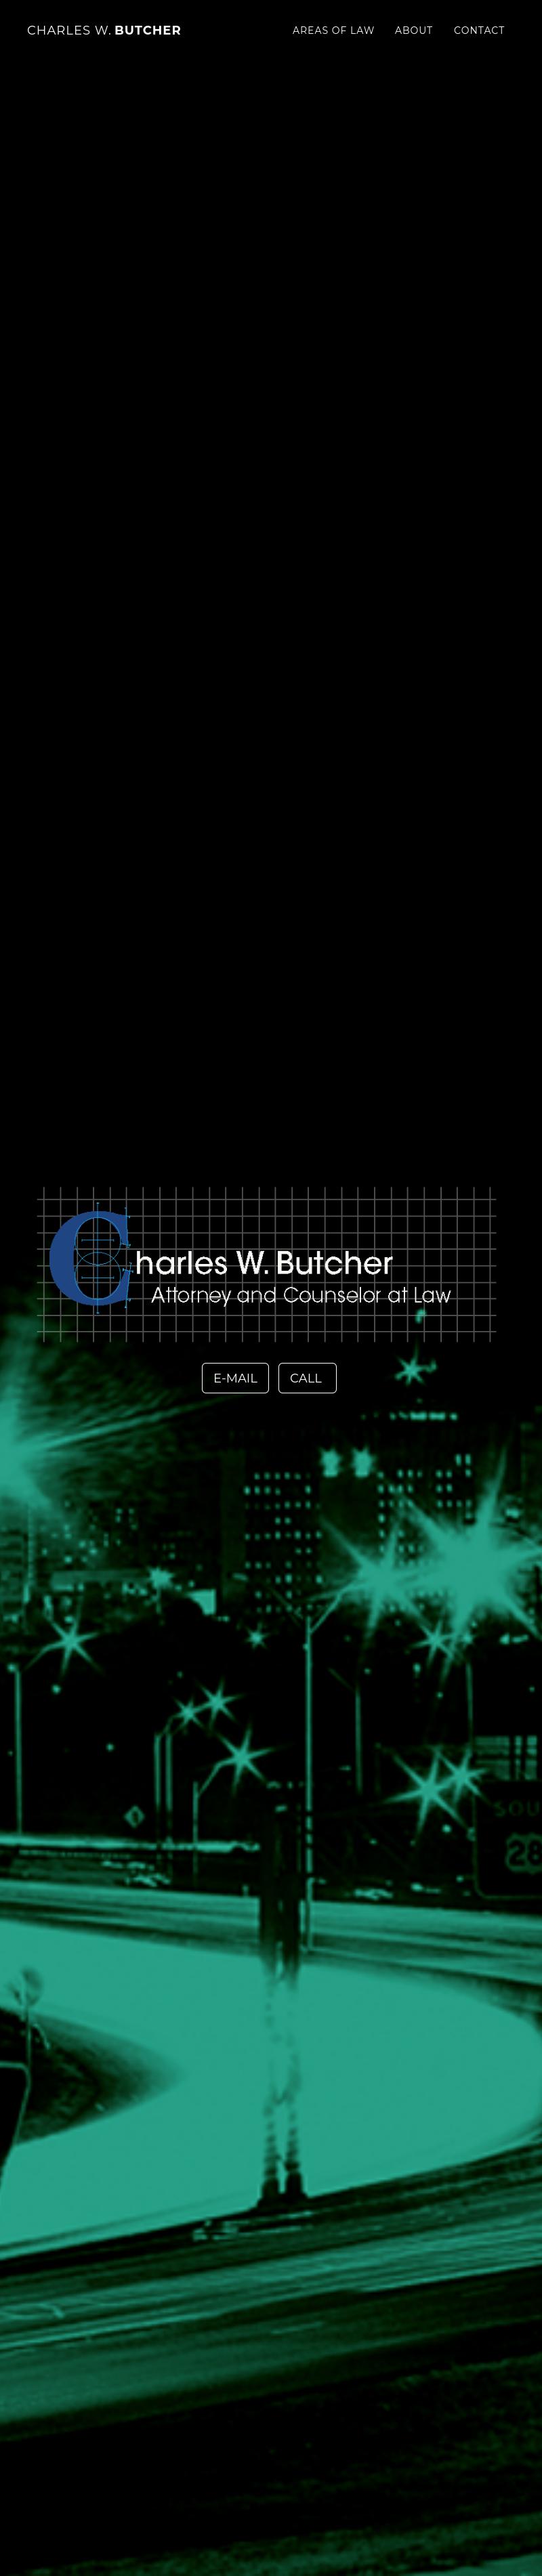 Law Office Of Charles W. Butcher - San Antonio TX Lawyers